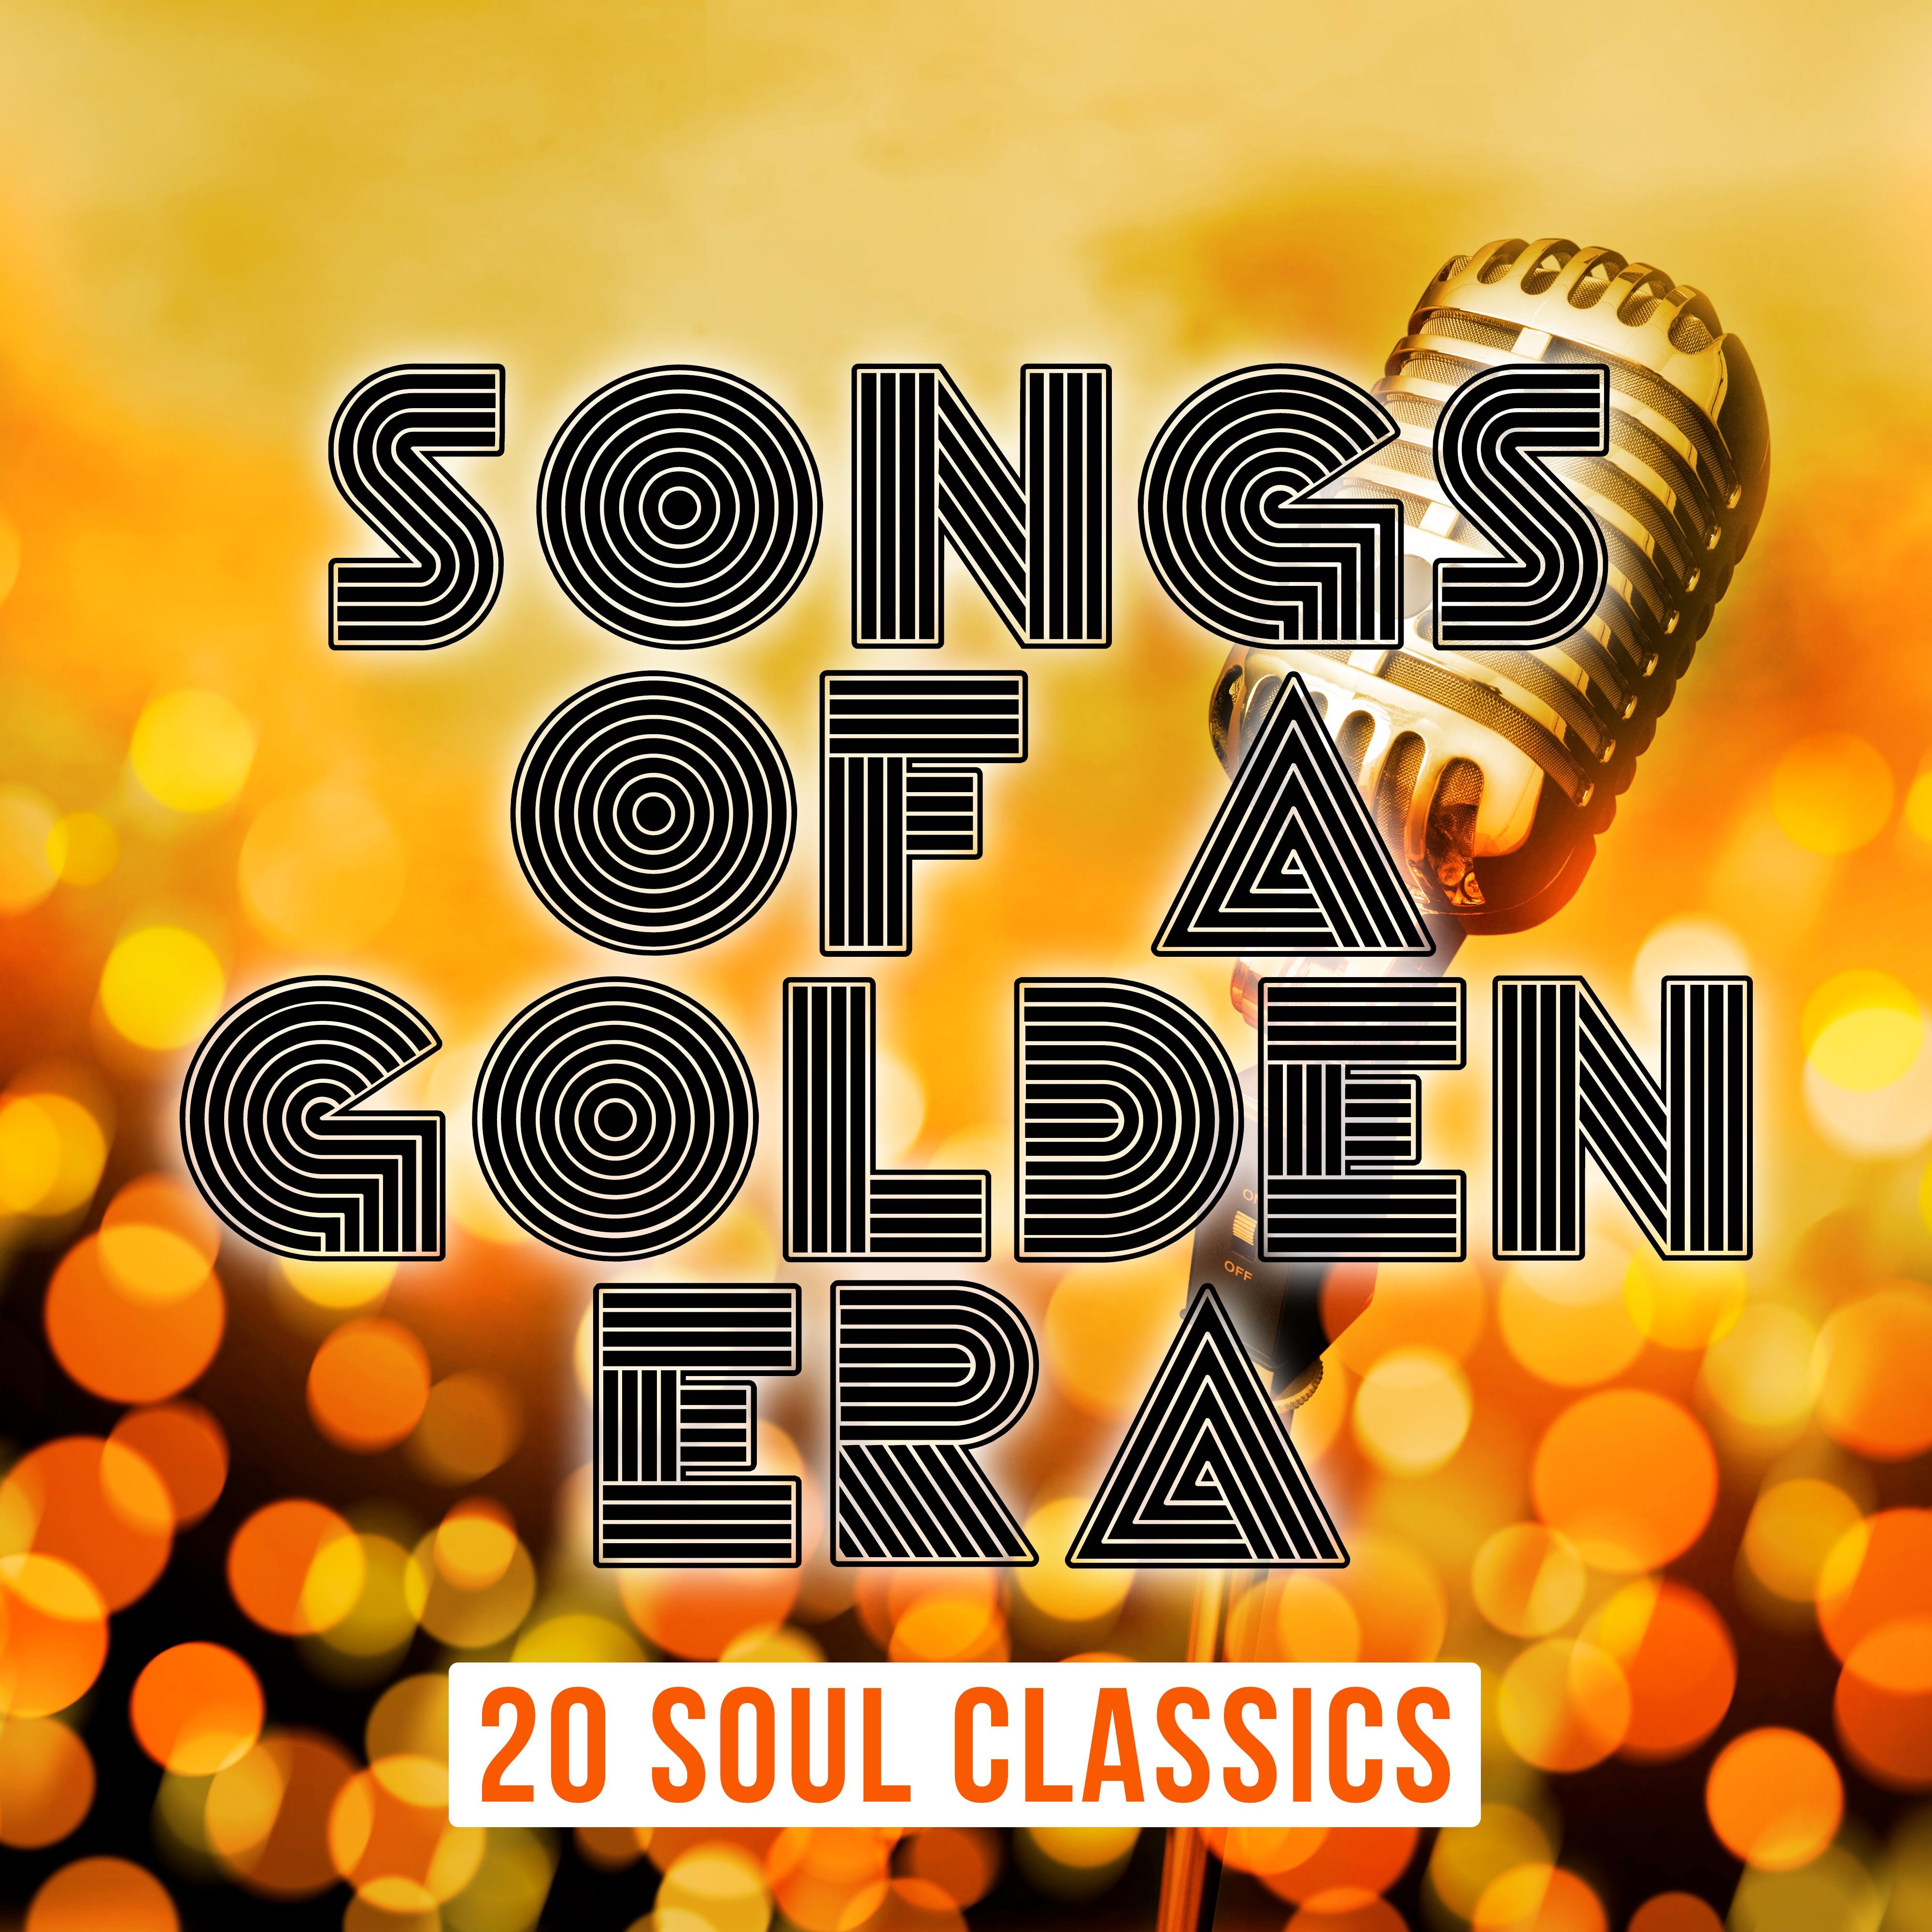 Songs of a Golden Era - 20 Soul Classics